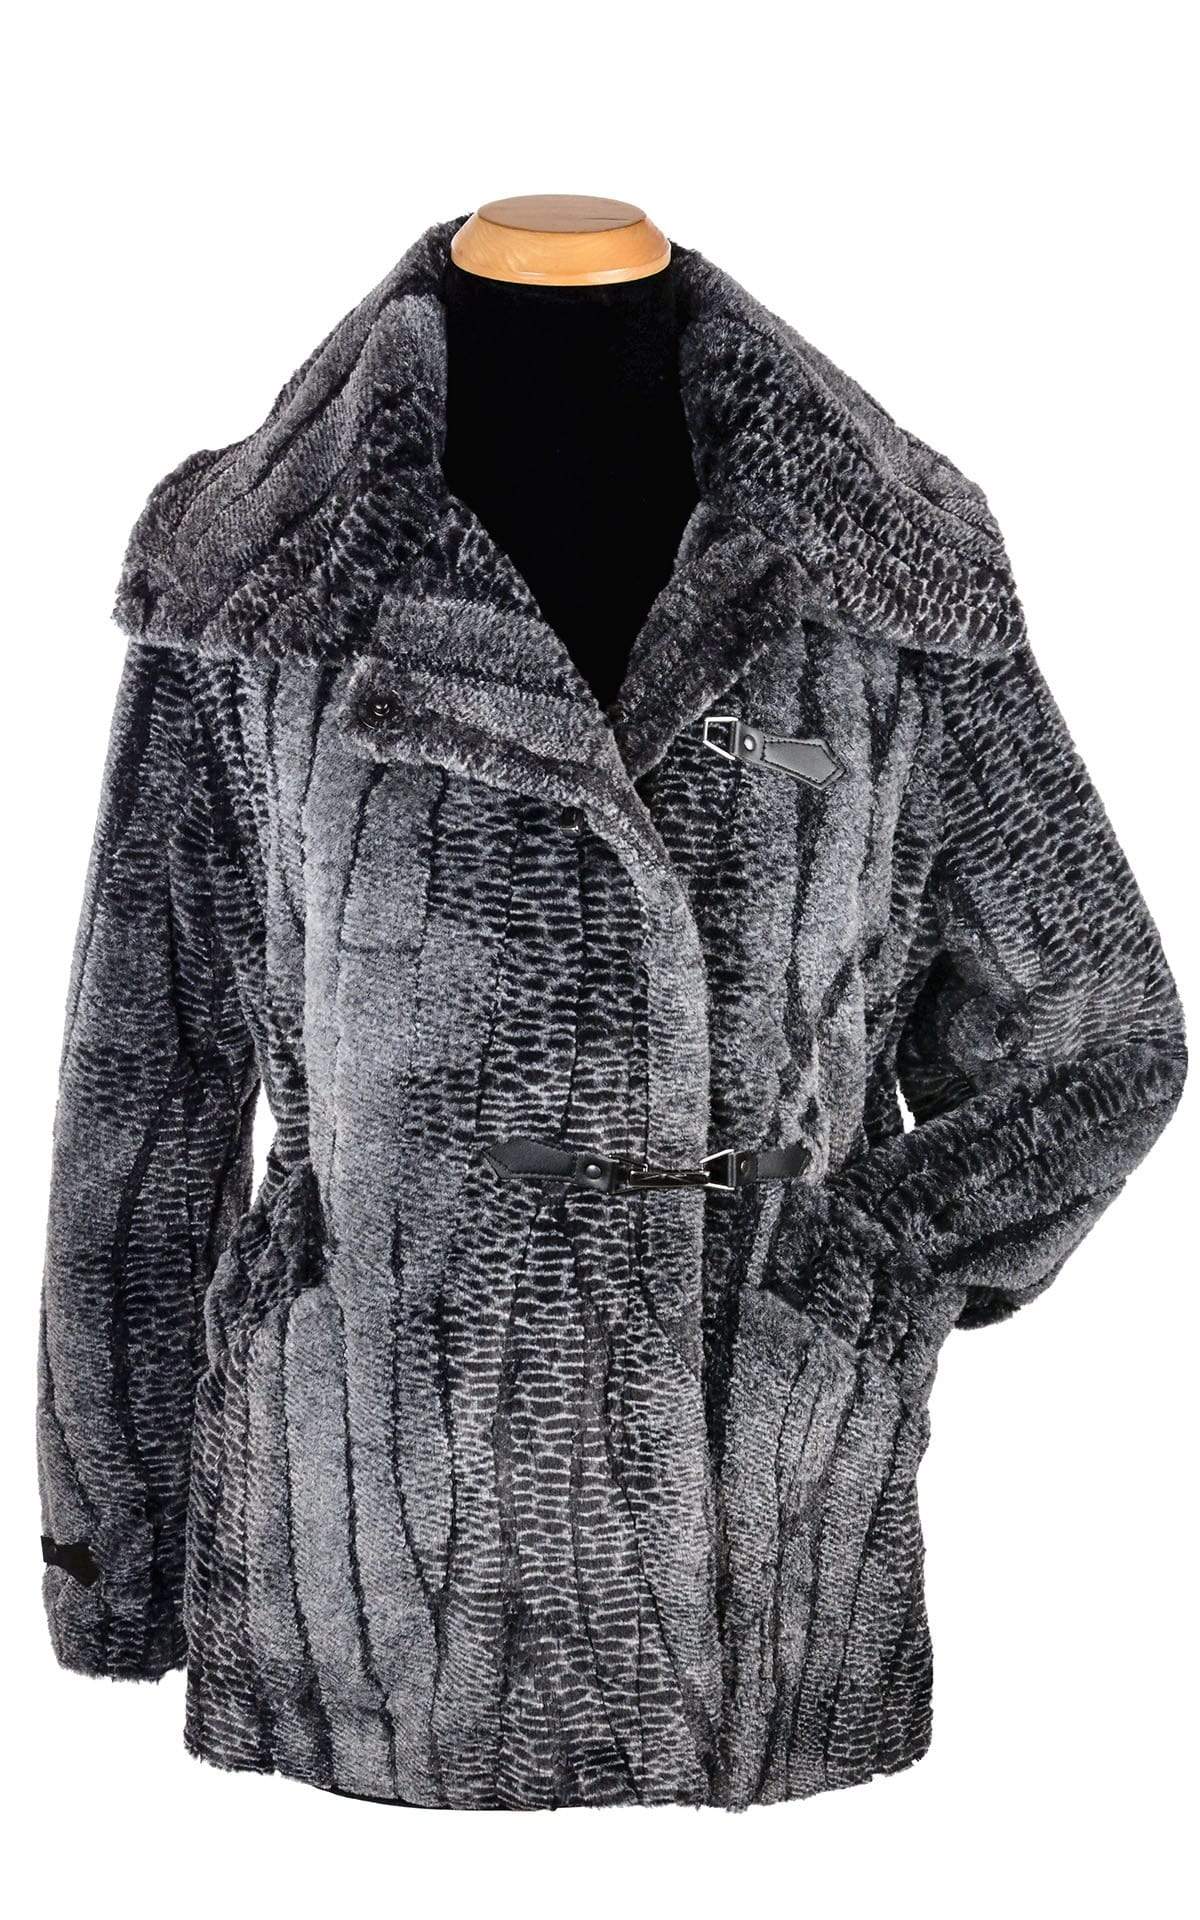 Open view of Dietrich Coat | Rattle Snake Faux Fur Pea Coat | Featuring Buckle Clasps | Handmade in Seattle, WA | Pandemonium Millinery